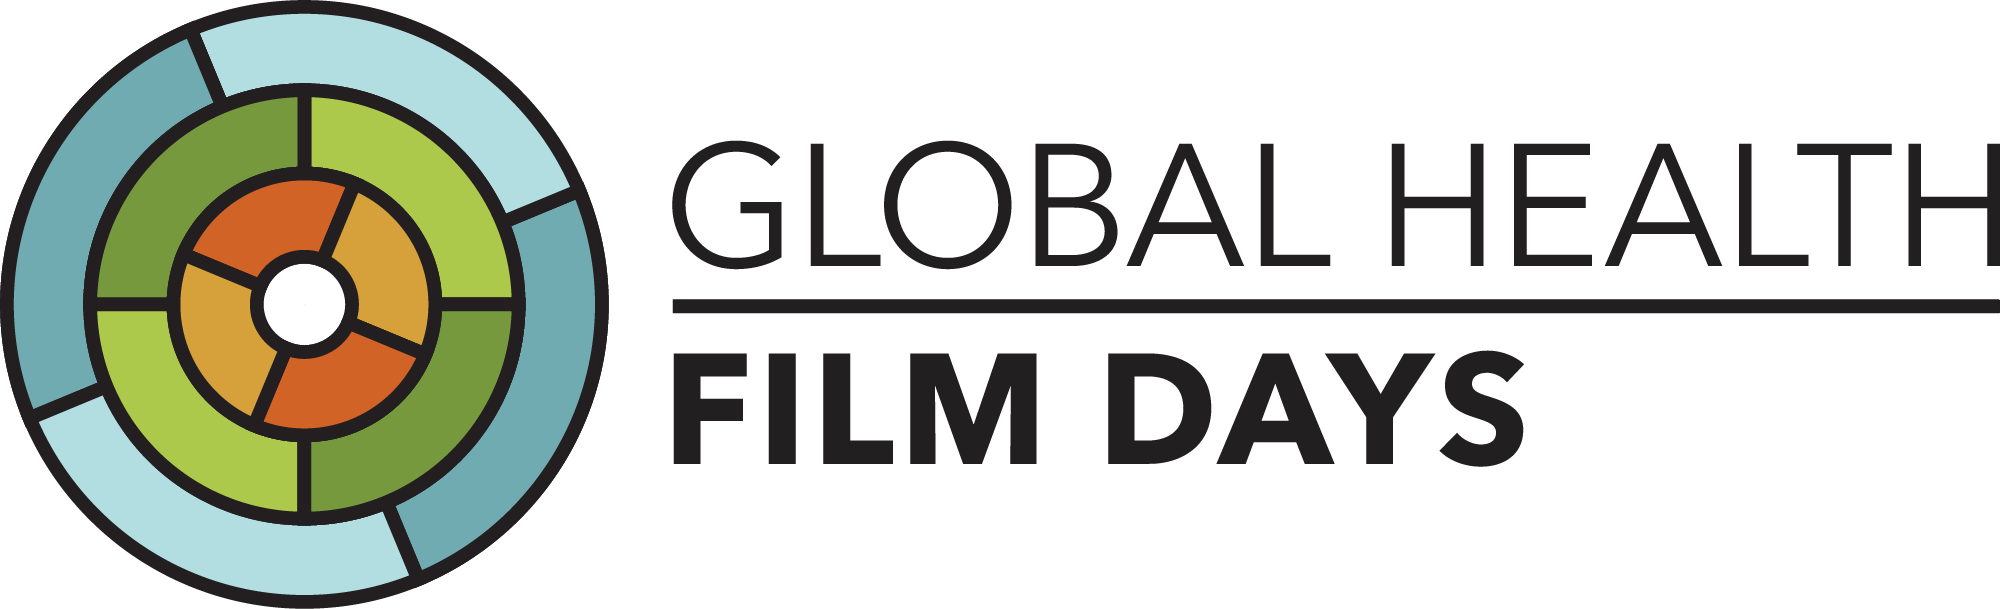 Global Health Film Days logo